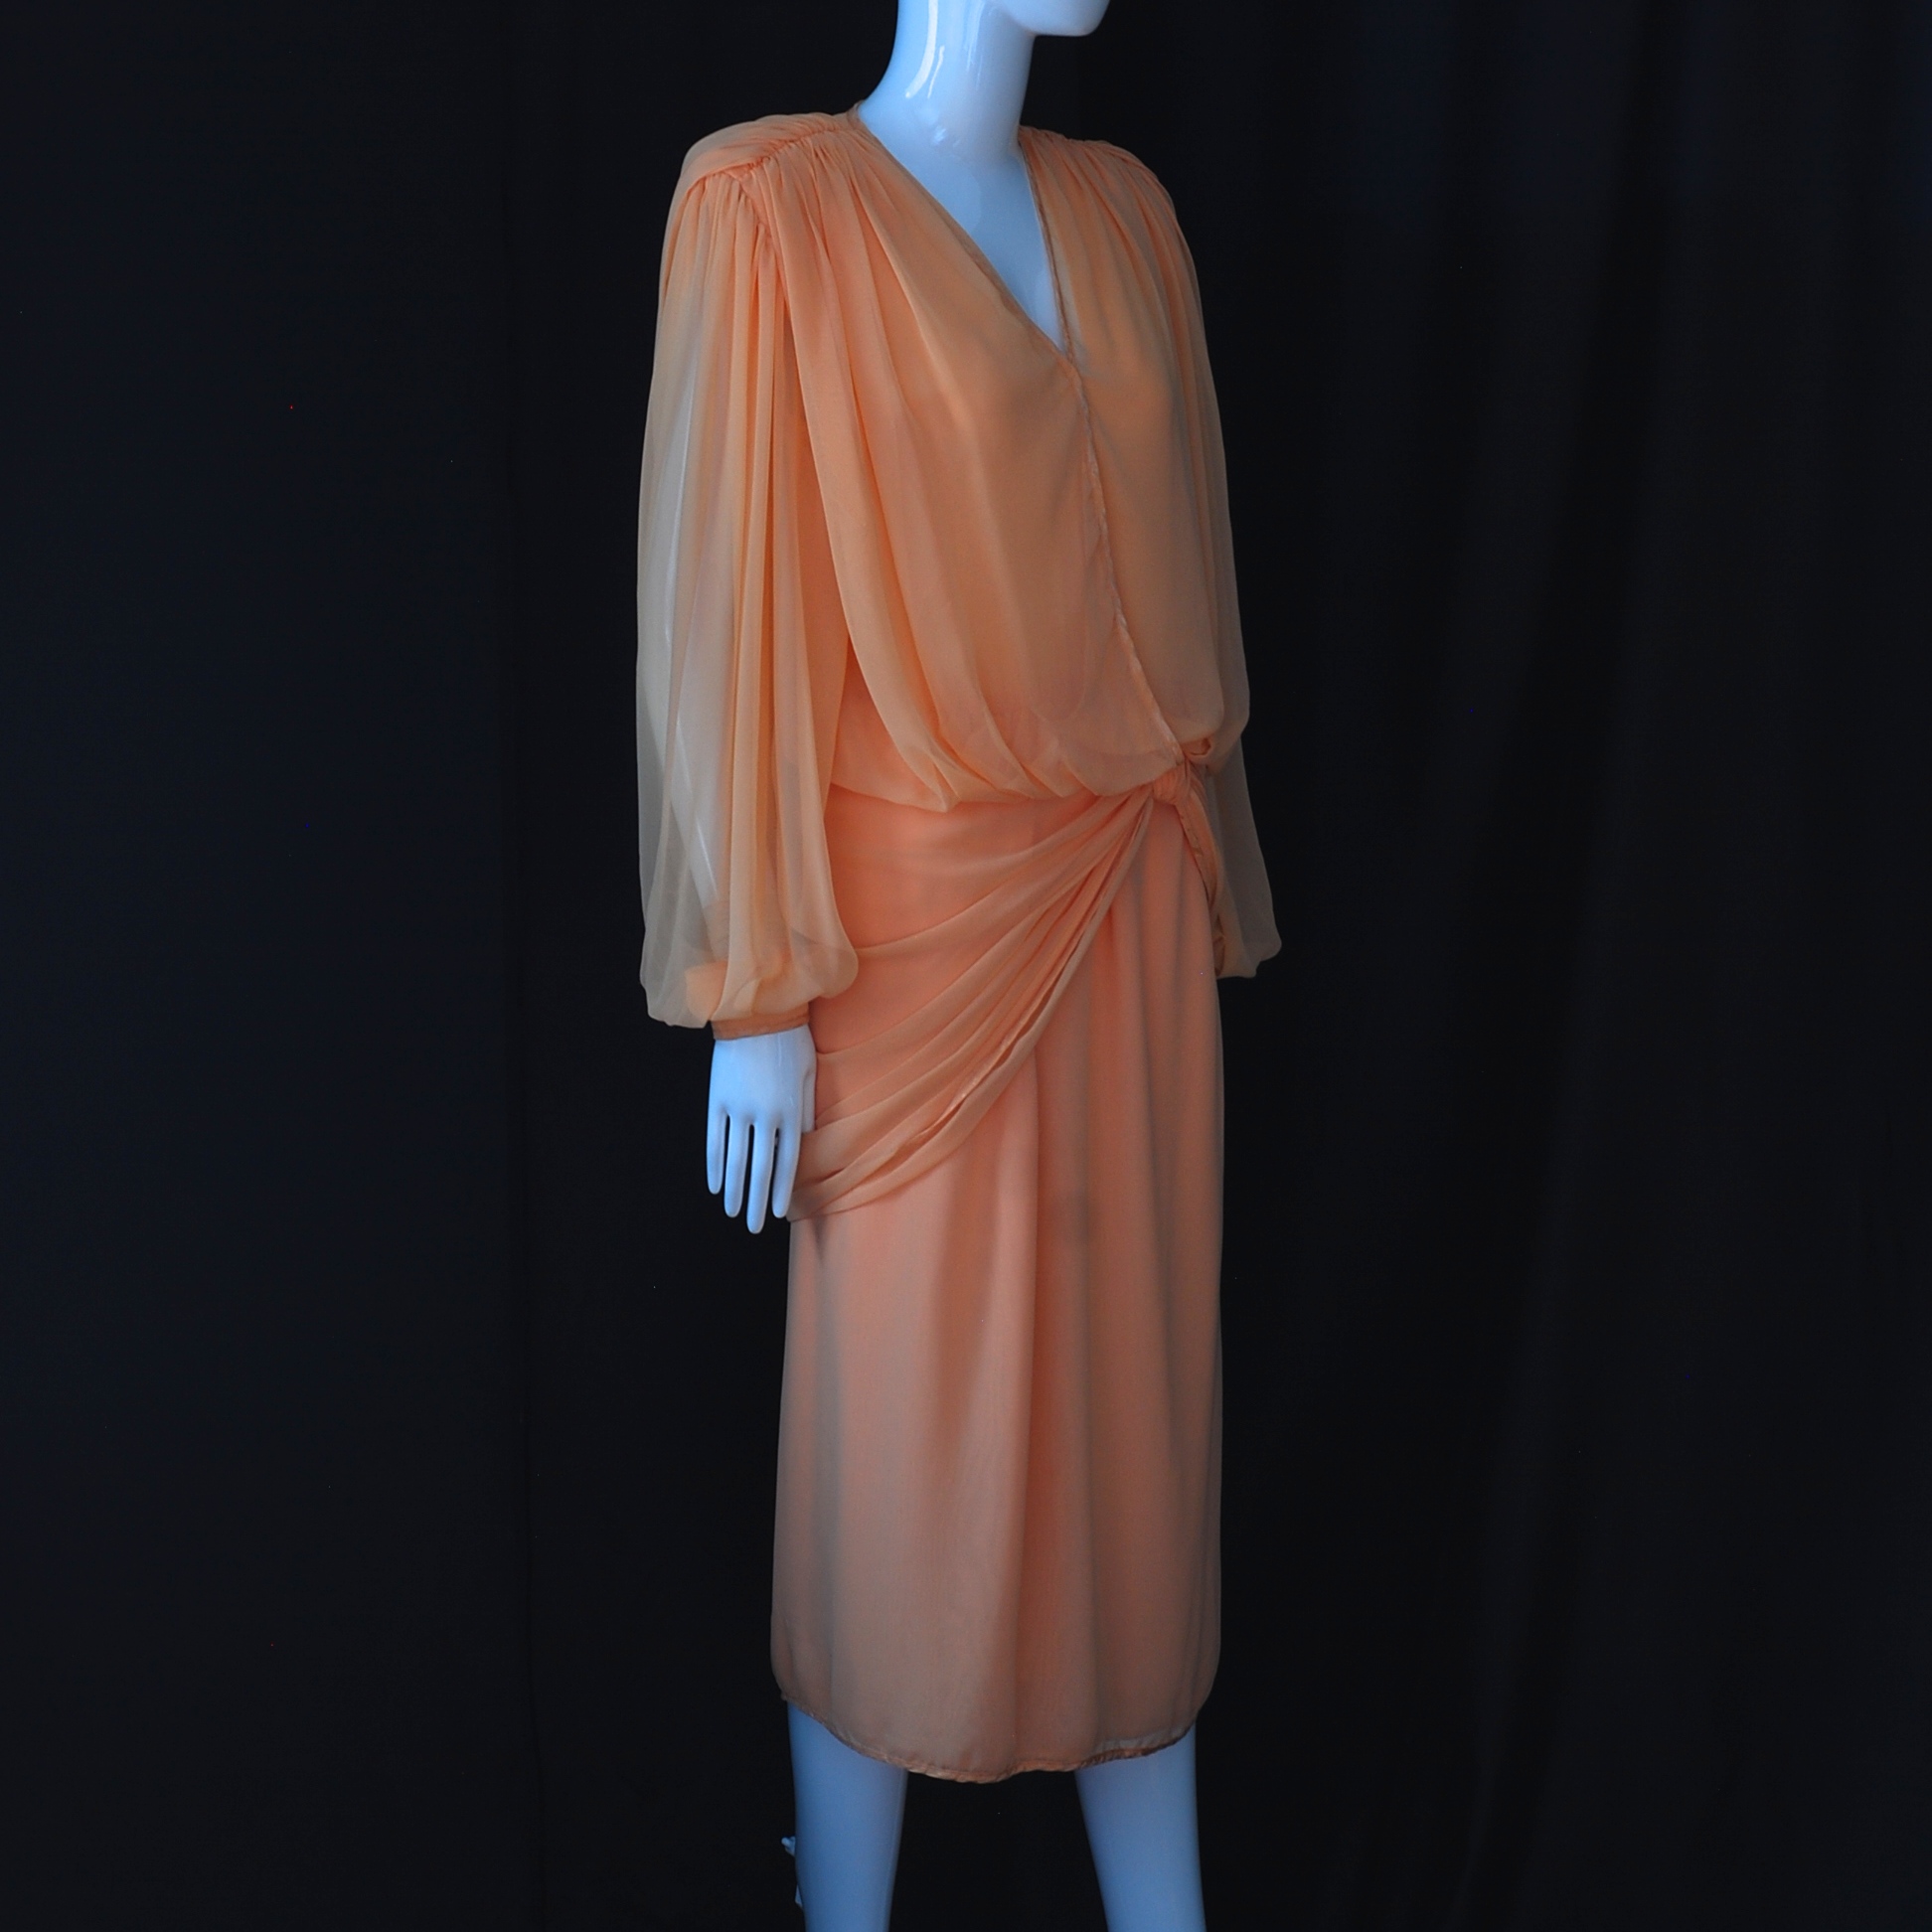 orange dress canada